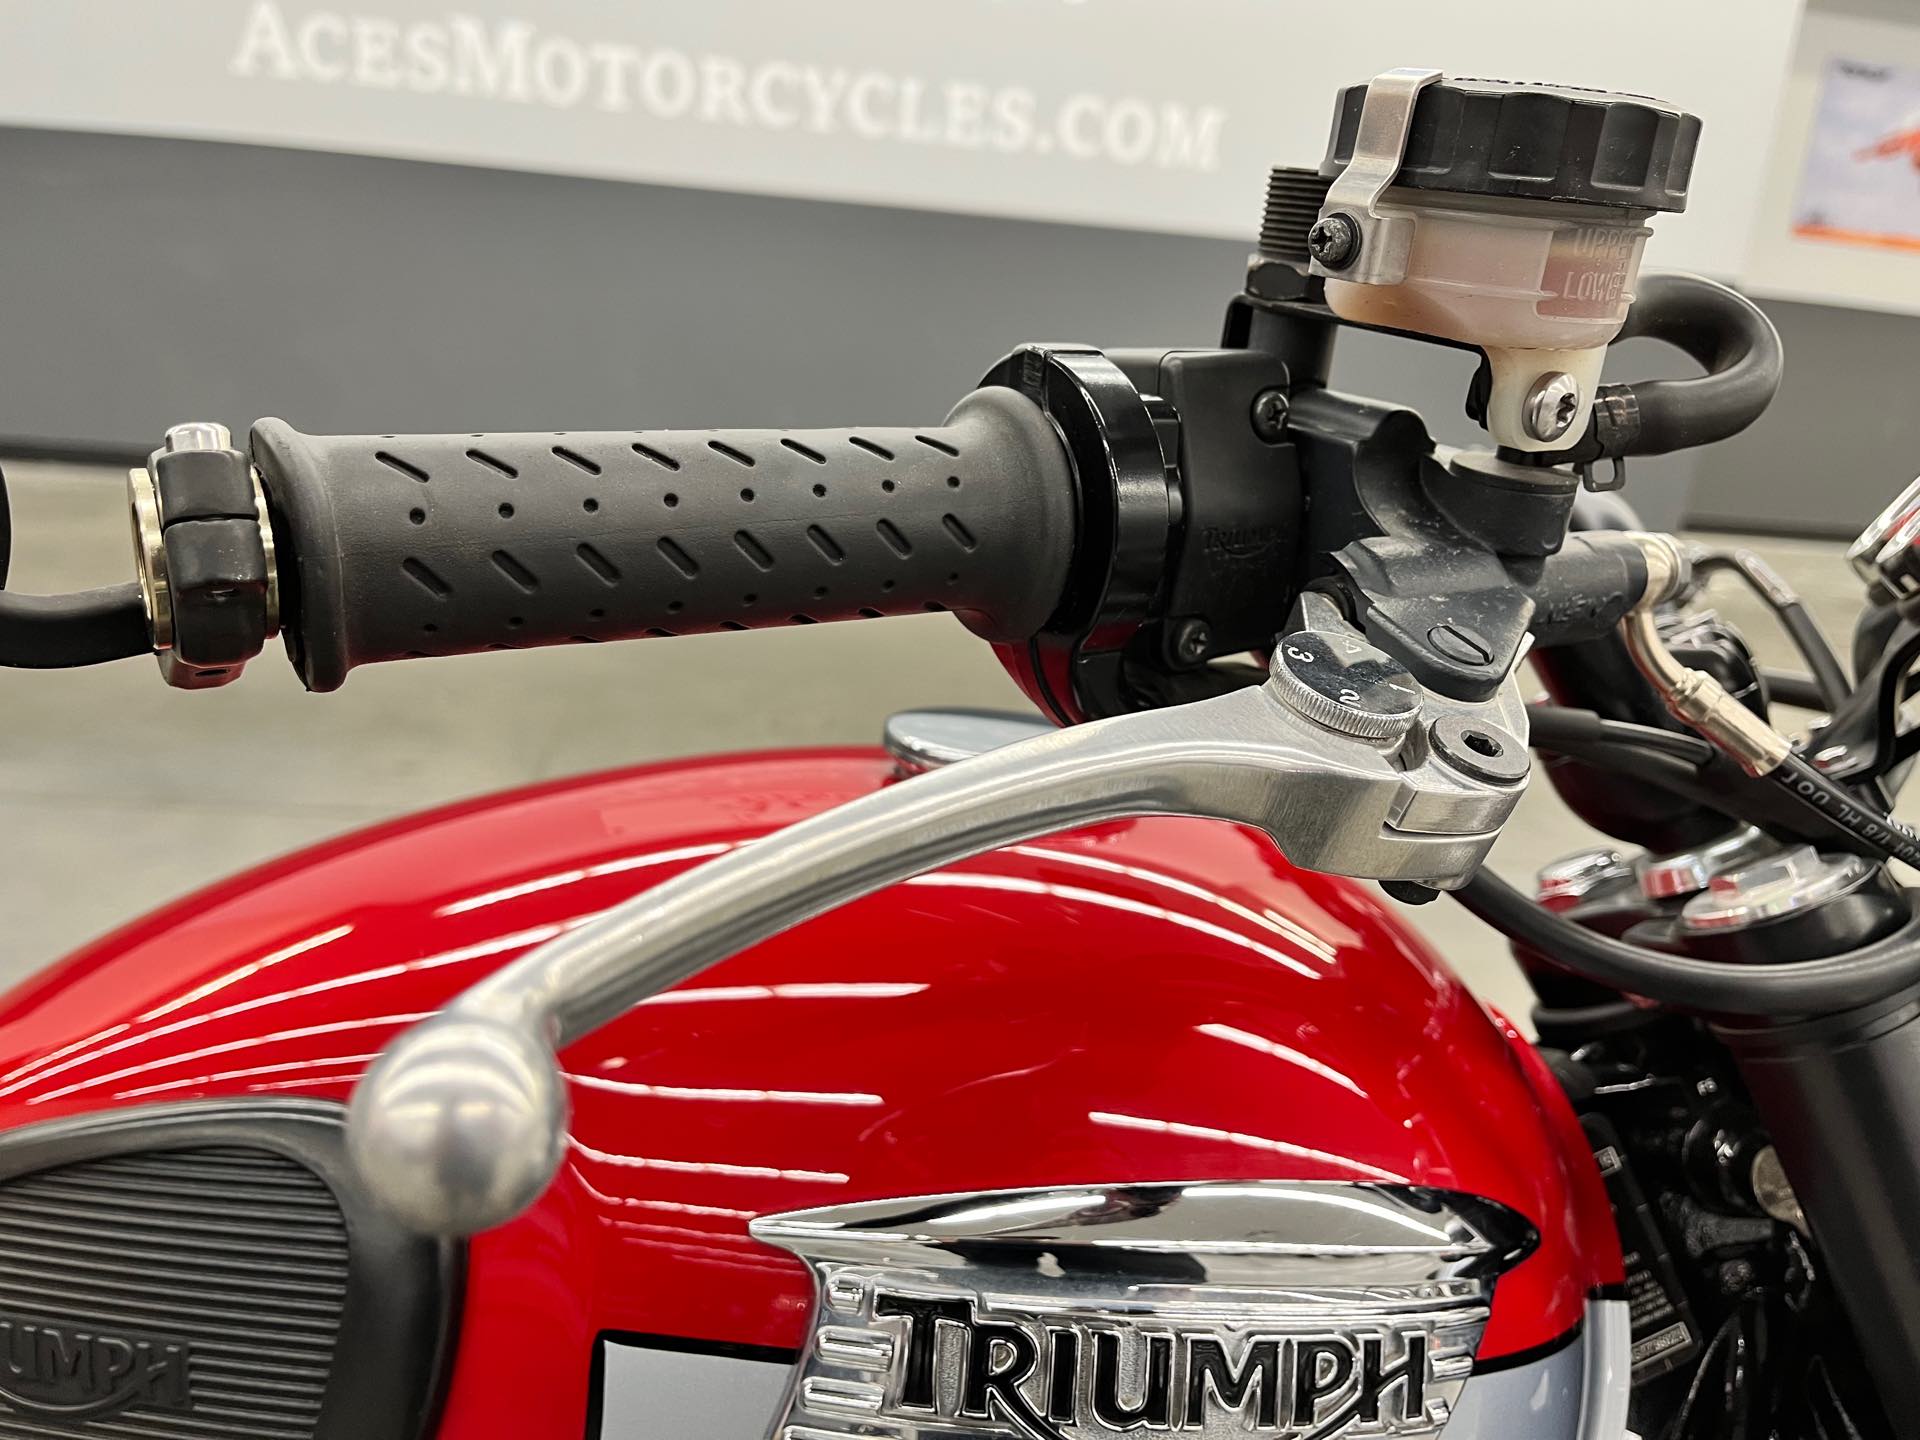 2016 Triumph Scrambler Base at Aces Motorcycles - Denver